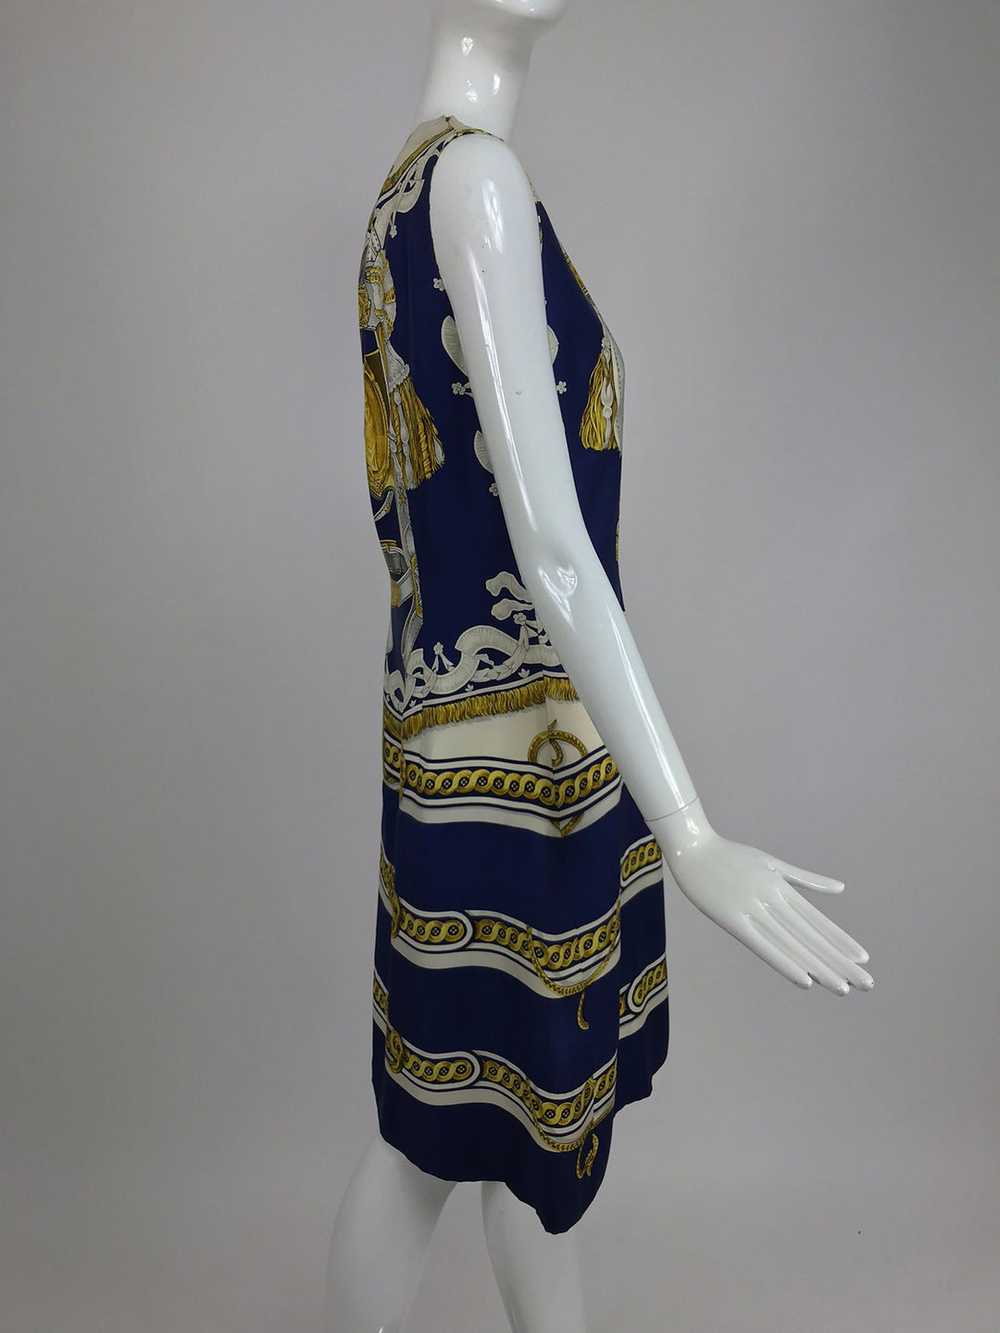 Hermes printed silk twill sheath dress 1970s 42 - image 6